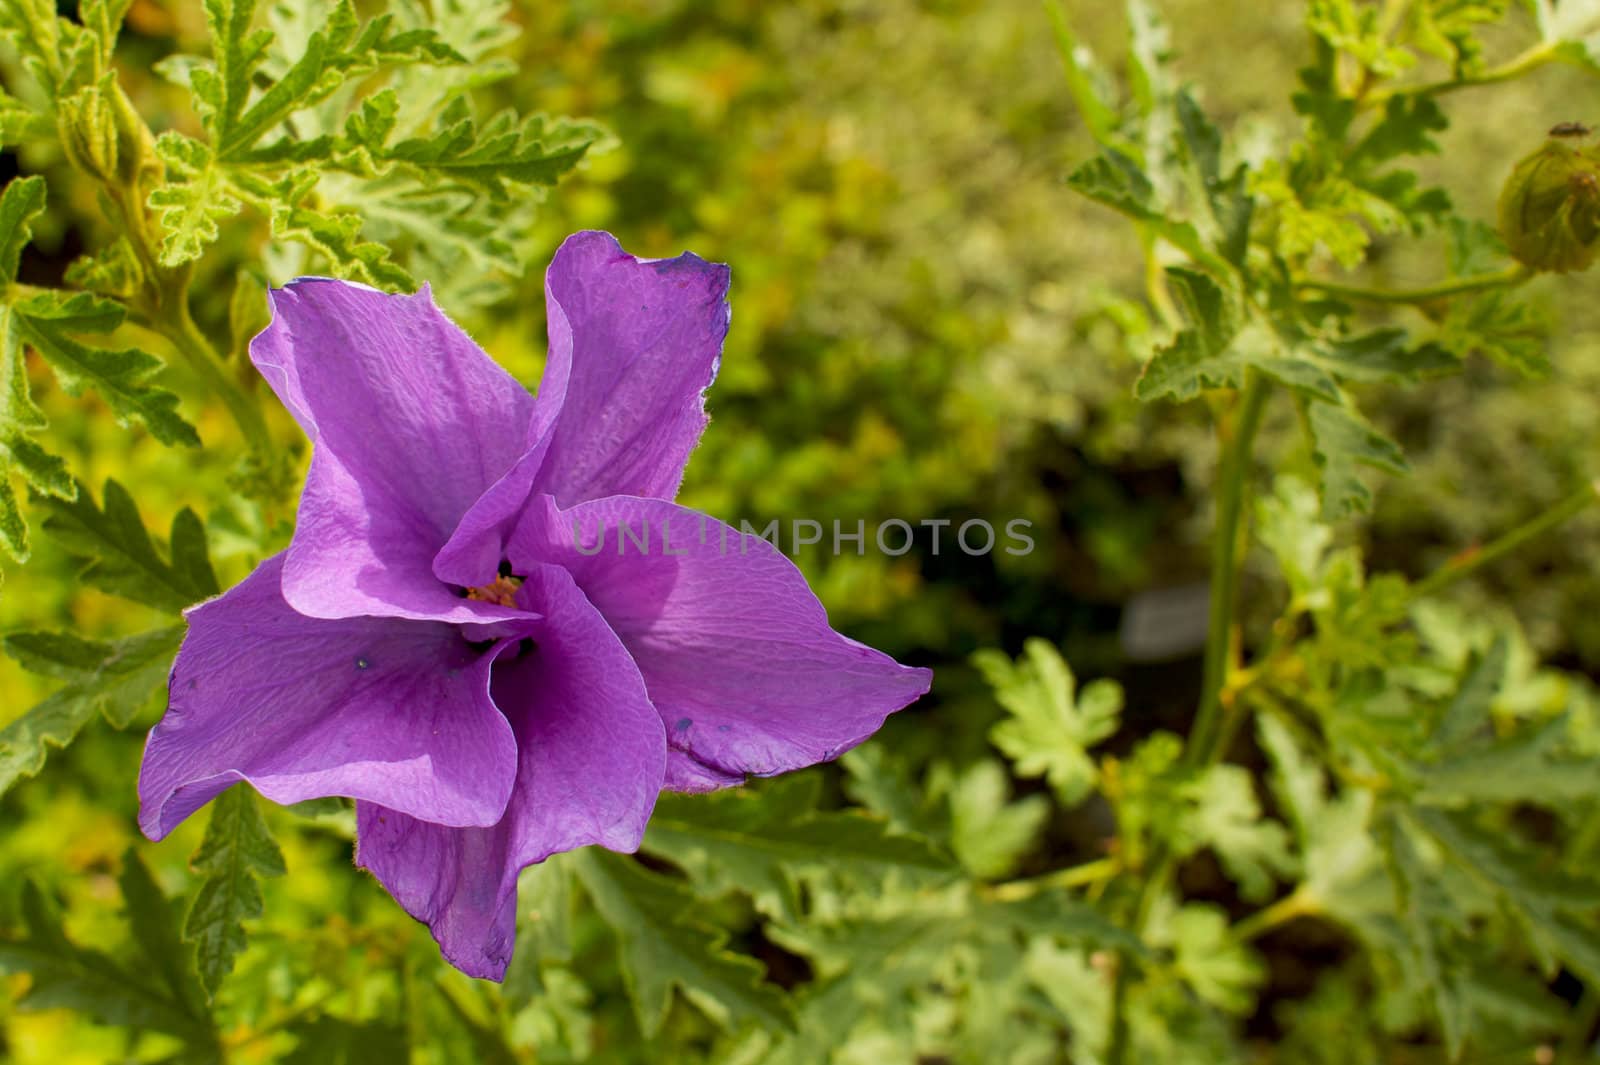 Clematis like purple flower by bobkeenan